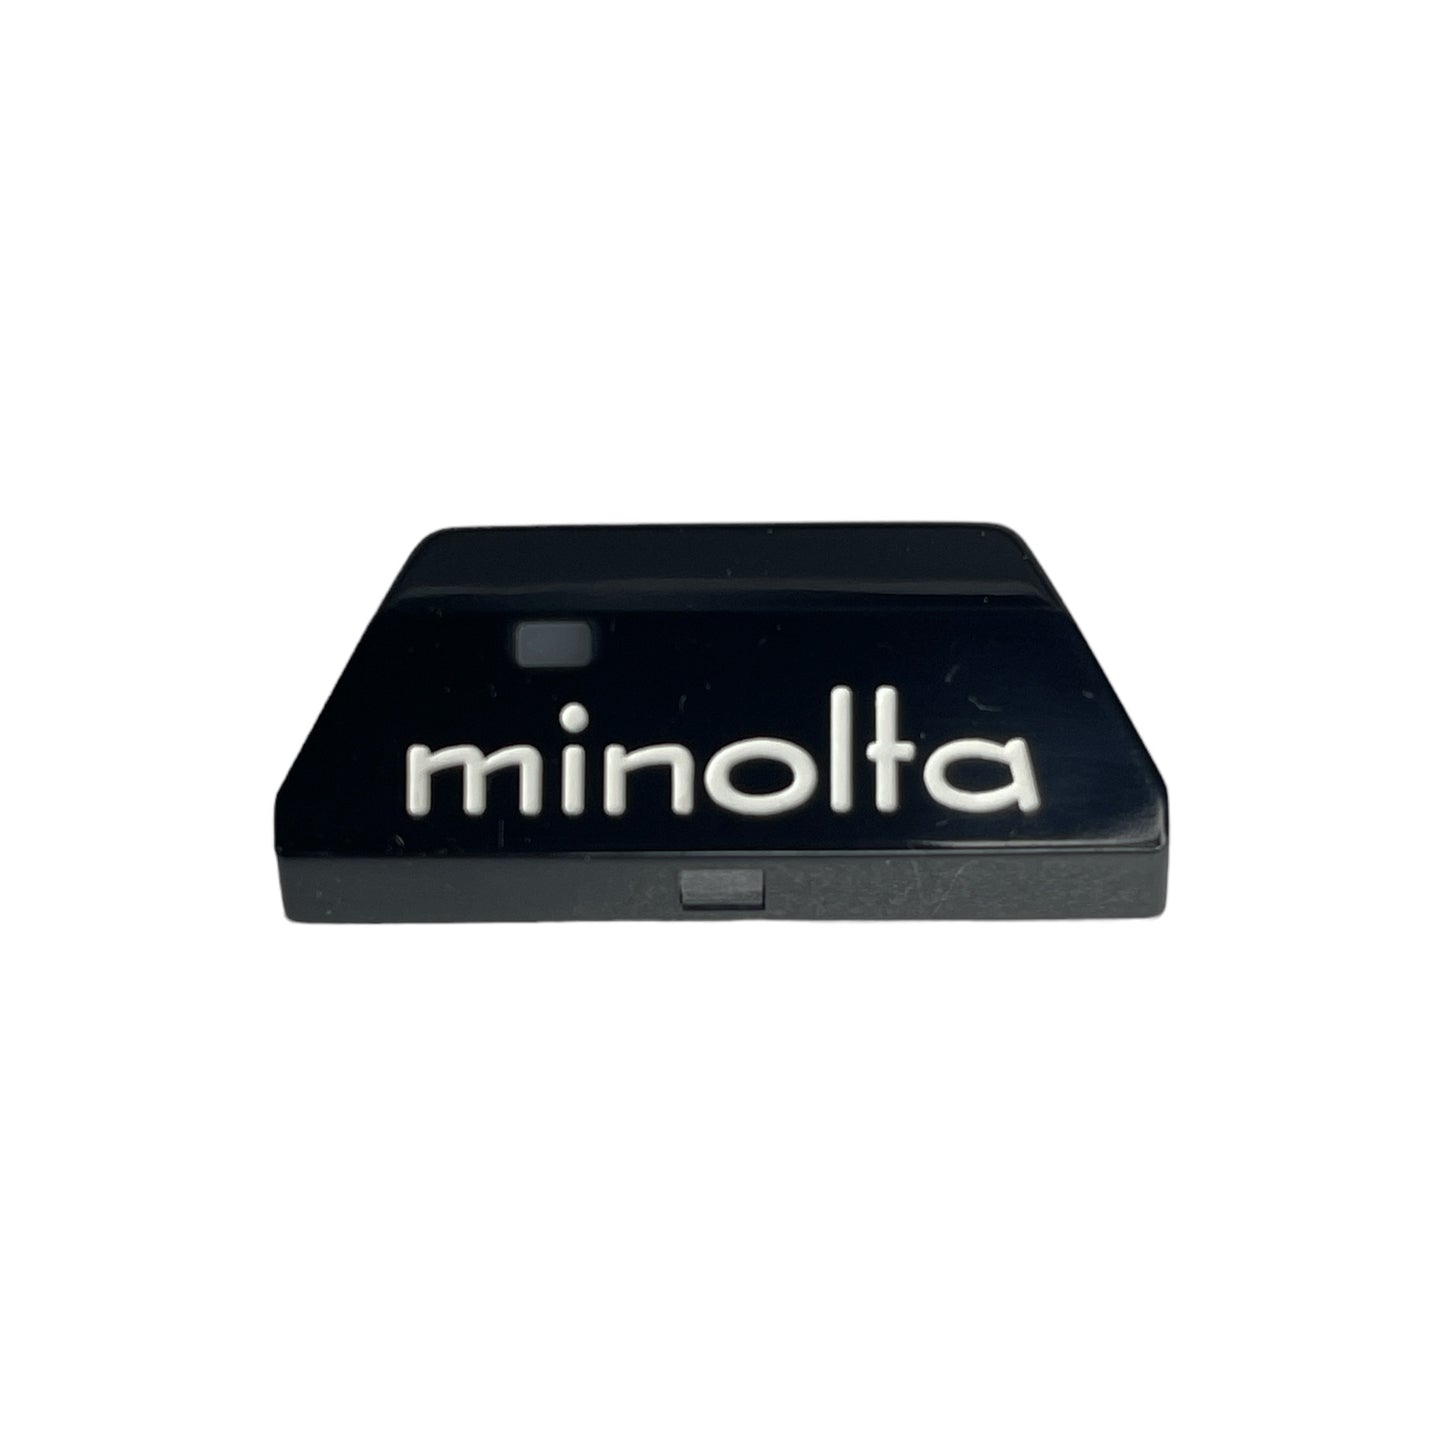 Minolta XE-7 Name Plate